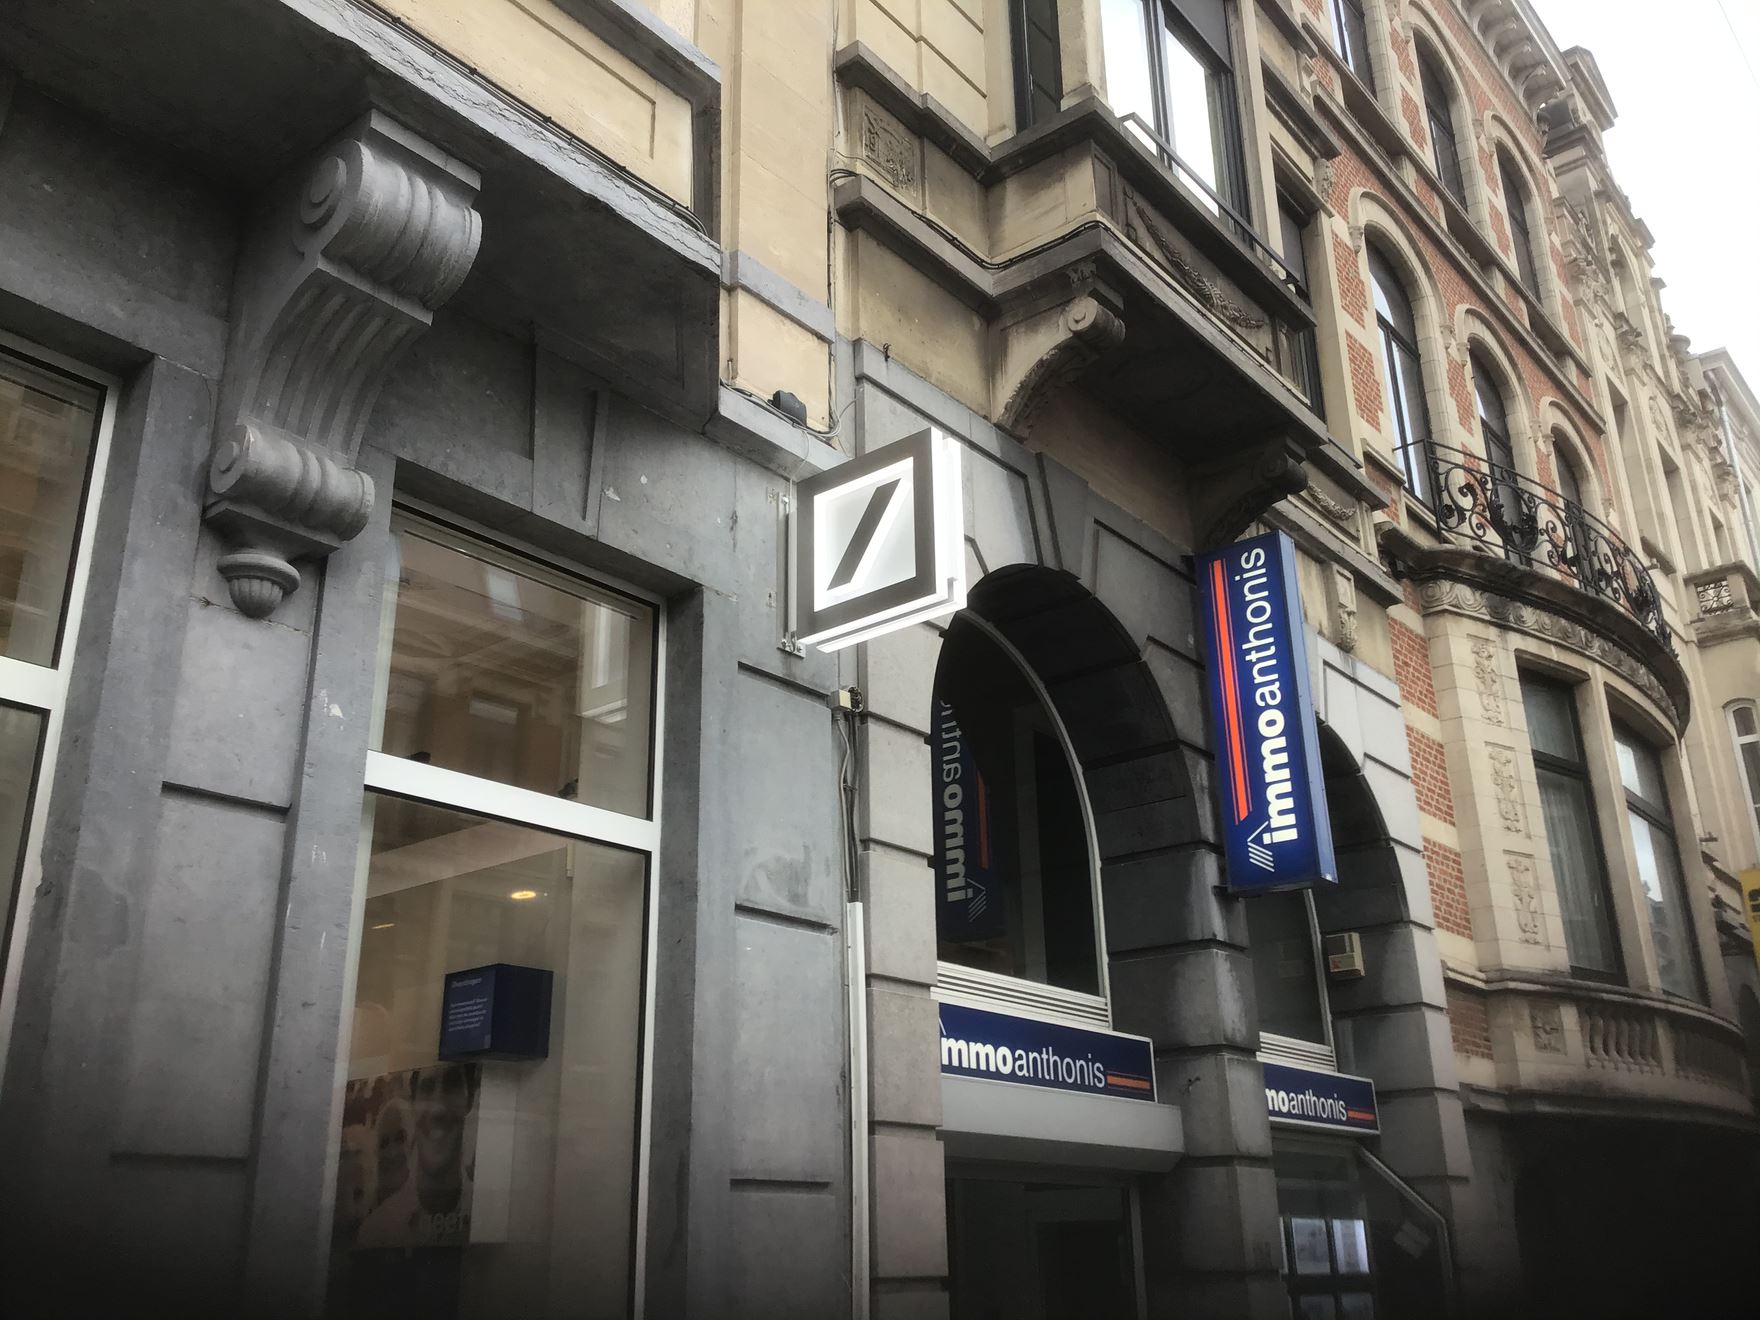 Deutsche Bank - dubbelzijdige lichtbak - eigen ontwerp